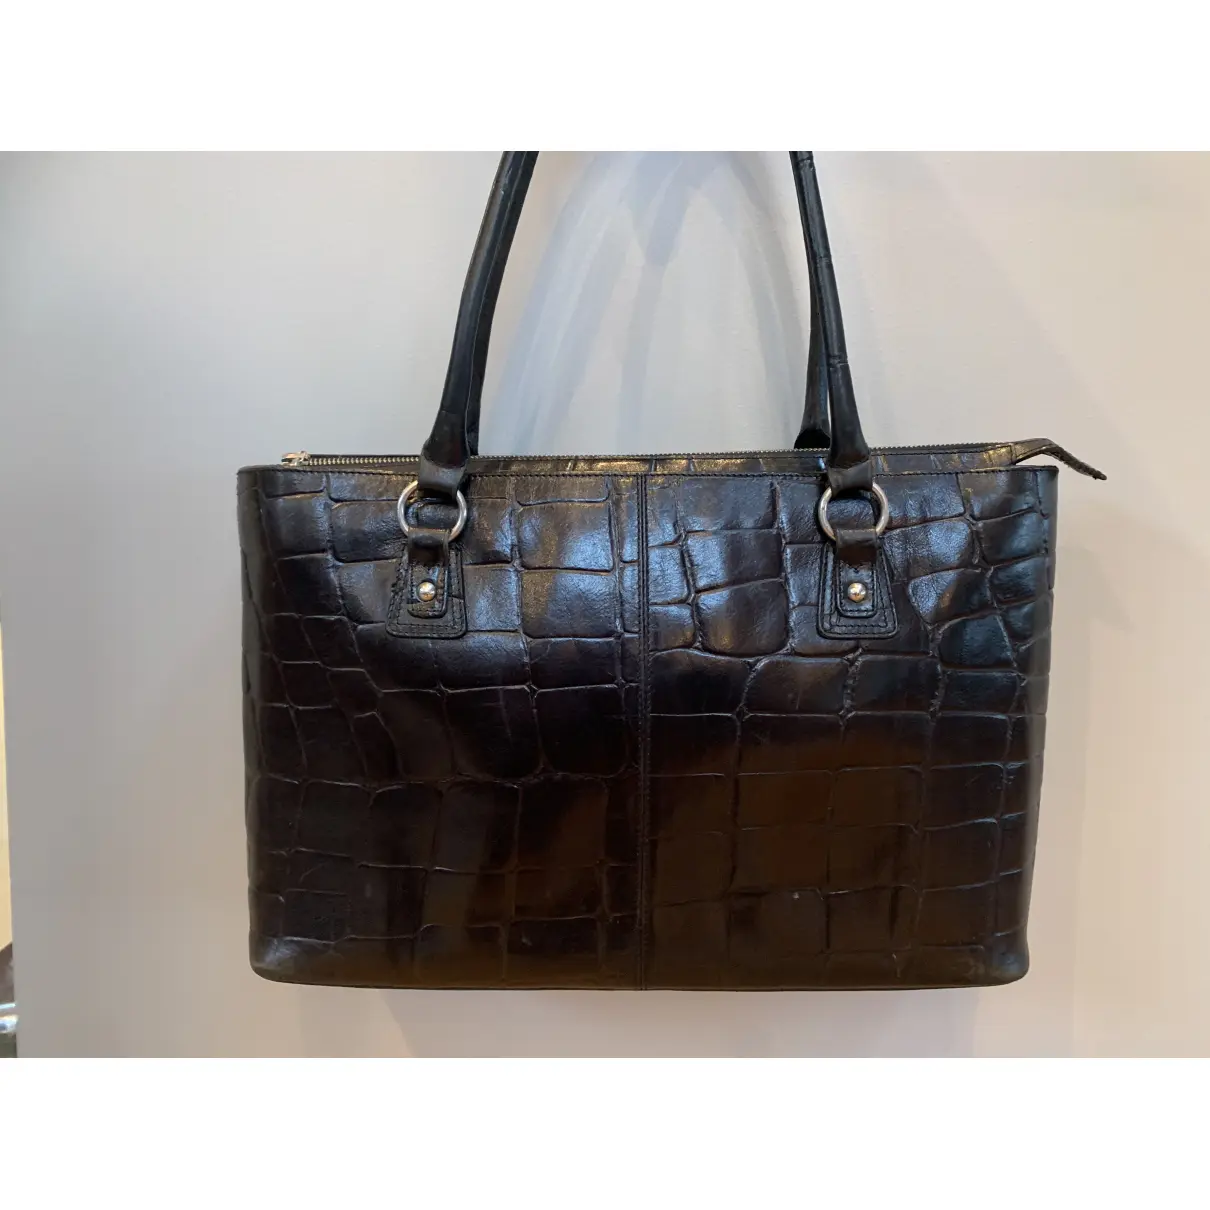 Buy Mulberry Leather handbag online